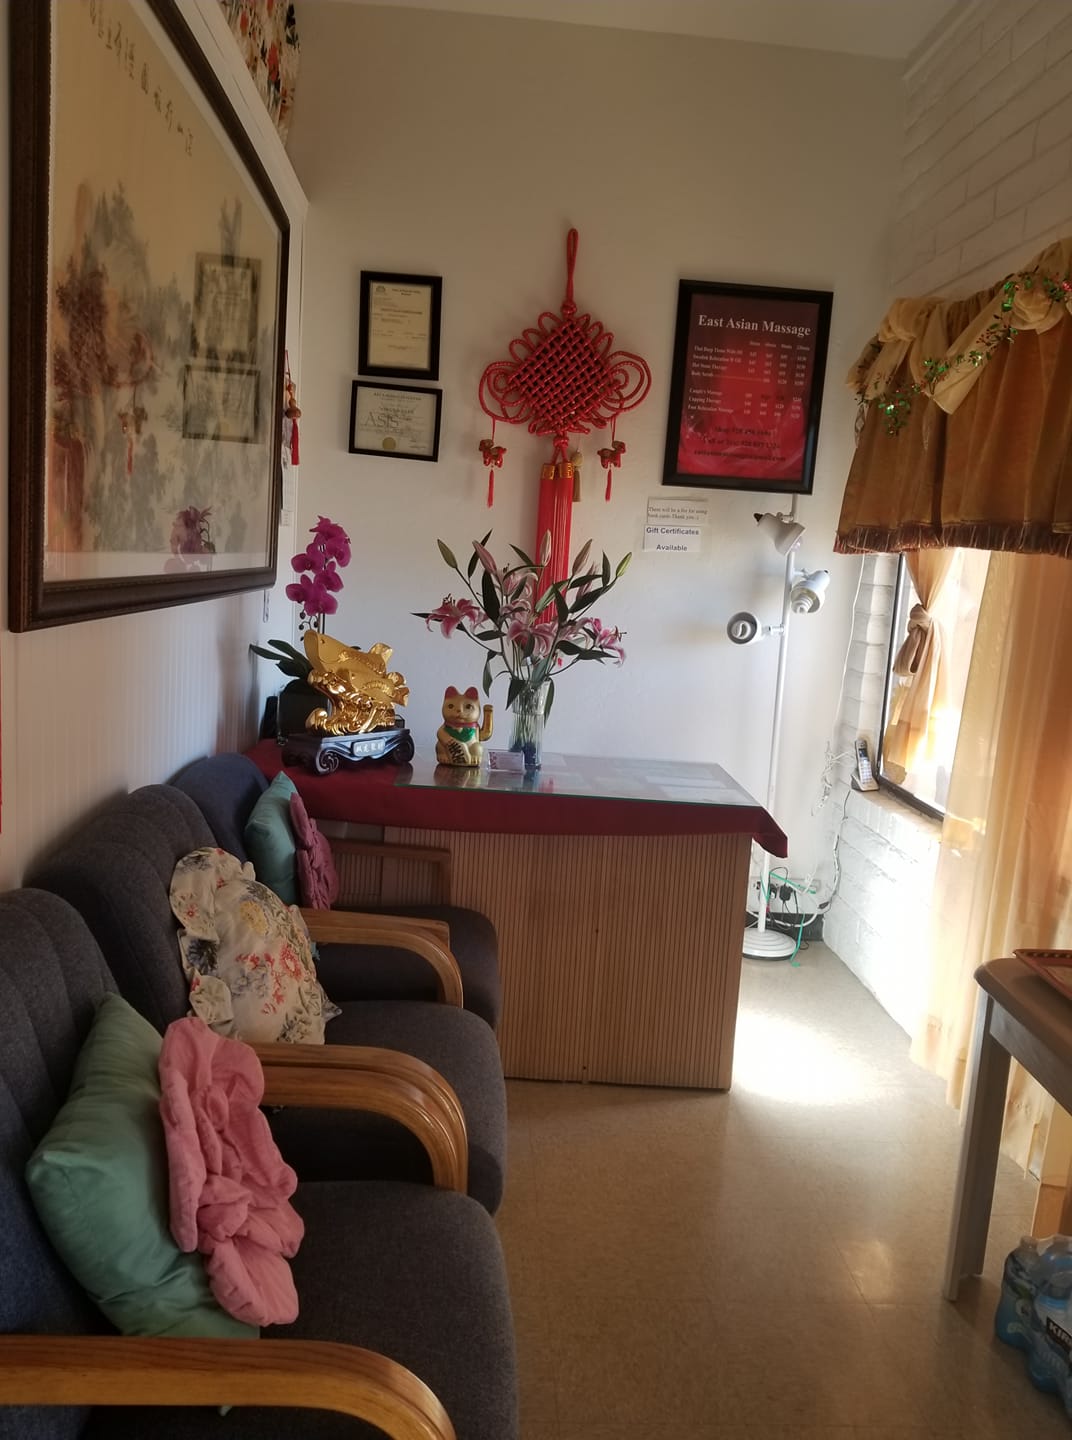 East Asia Massage in Prescott Valley, Arizona